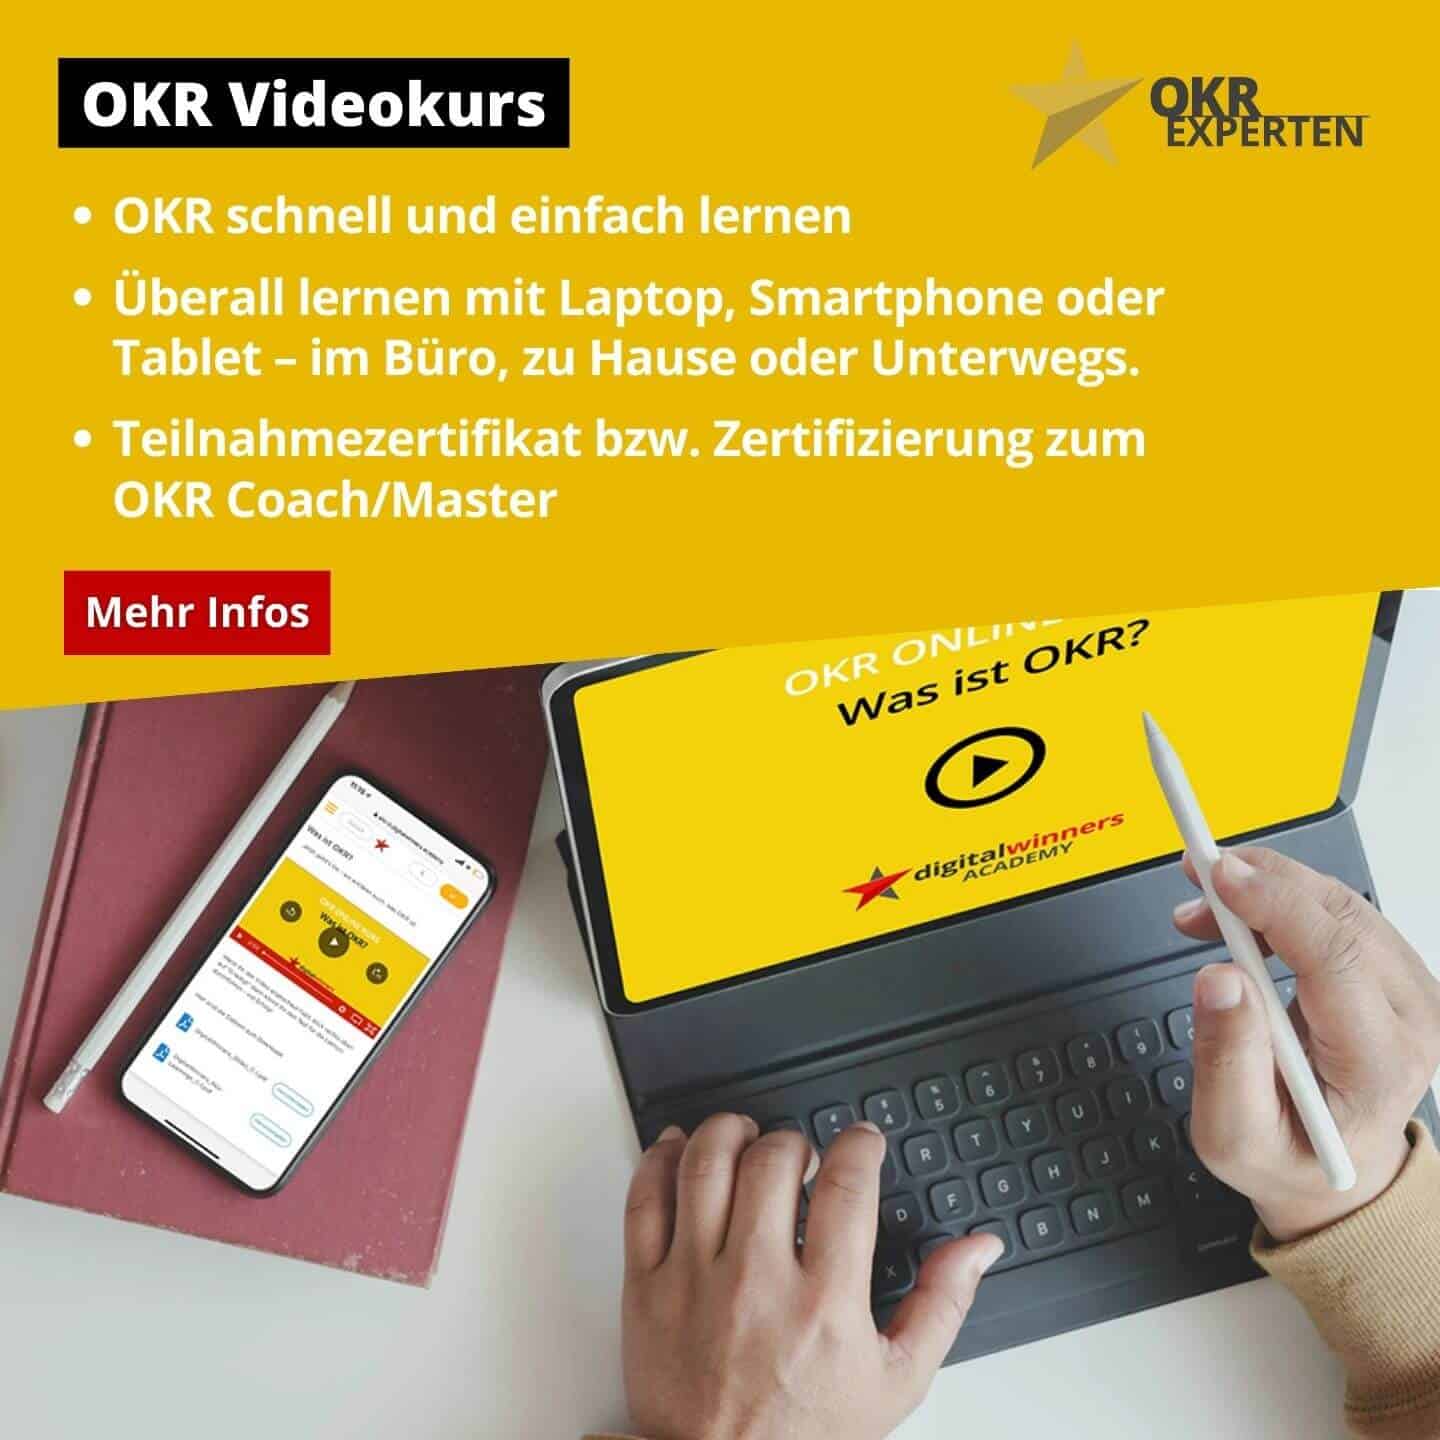 OKR Videokurs